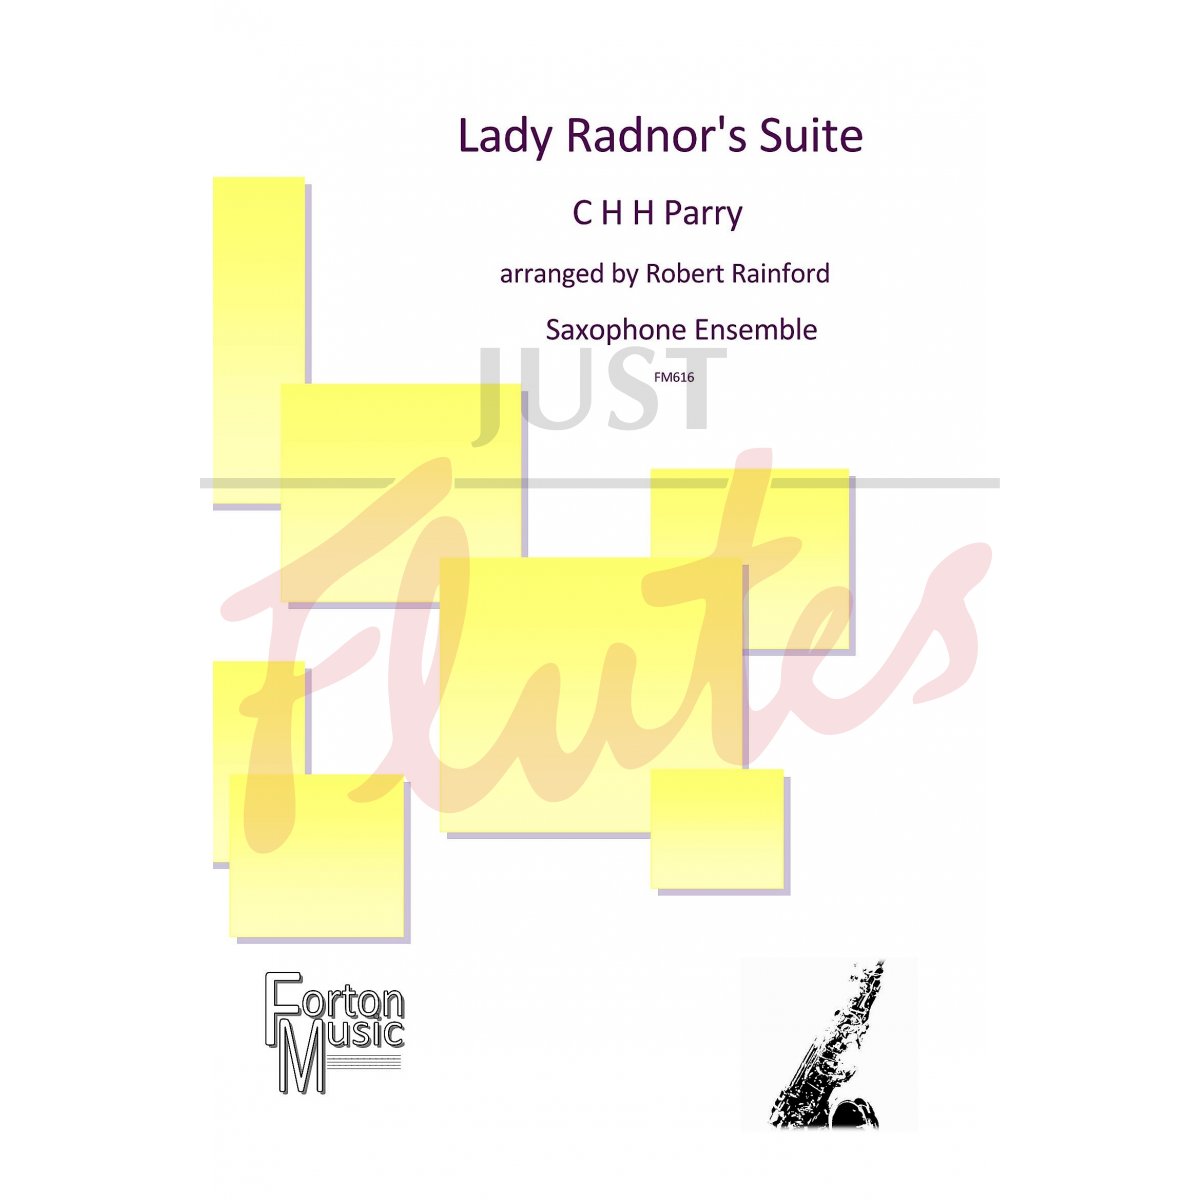 Lady Radnor's Suite